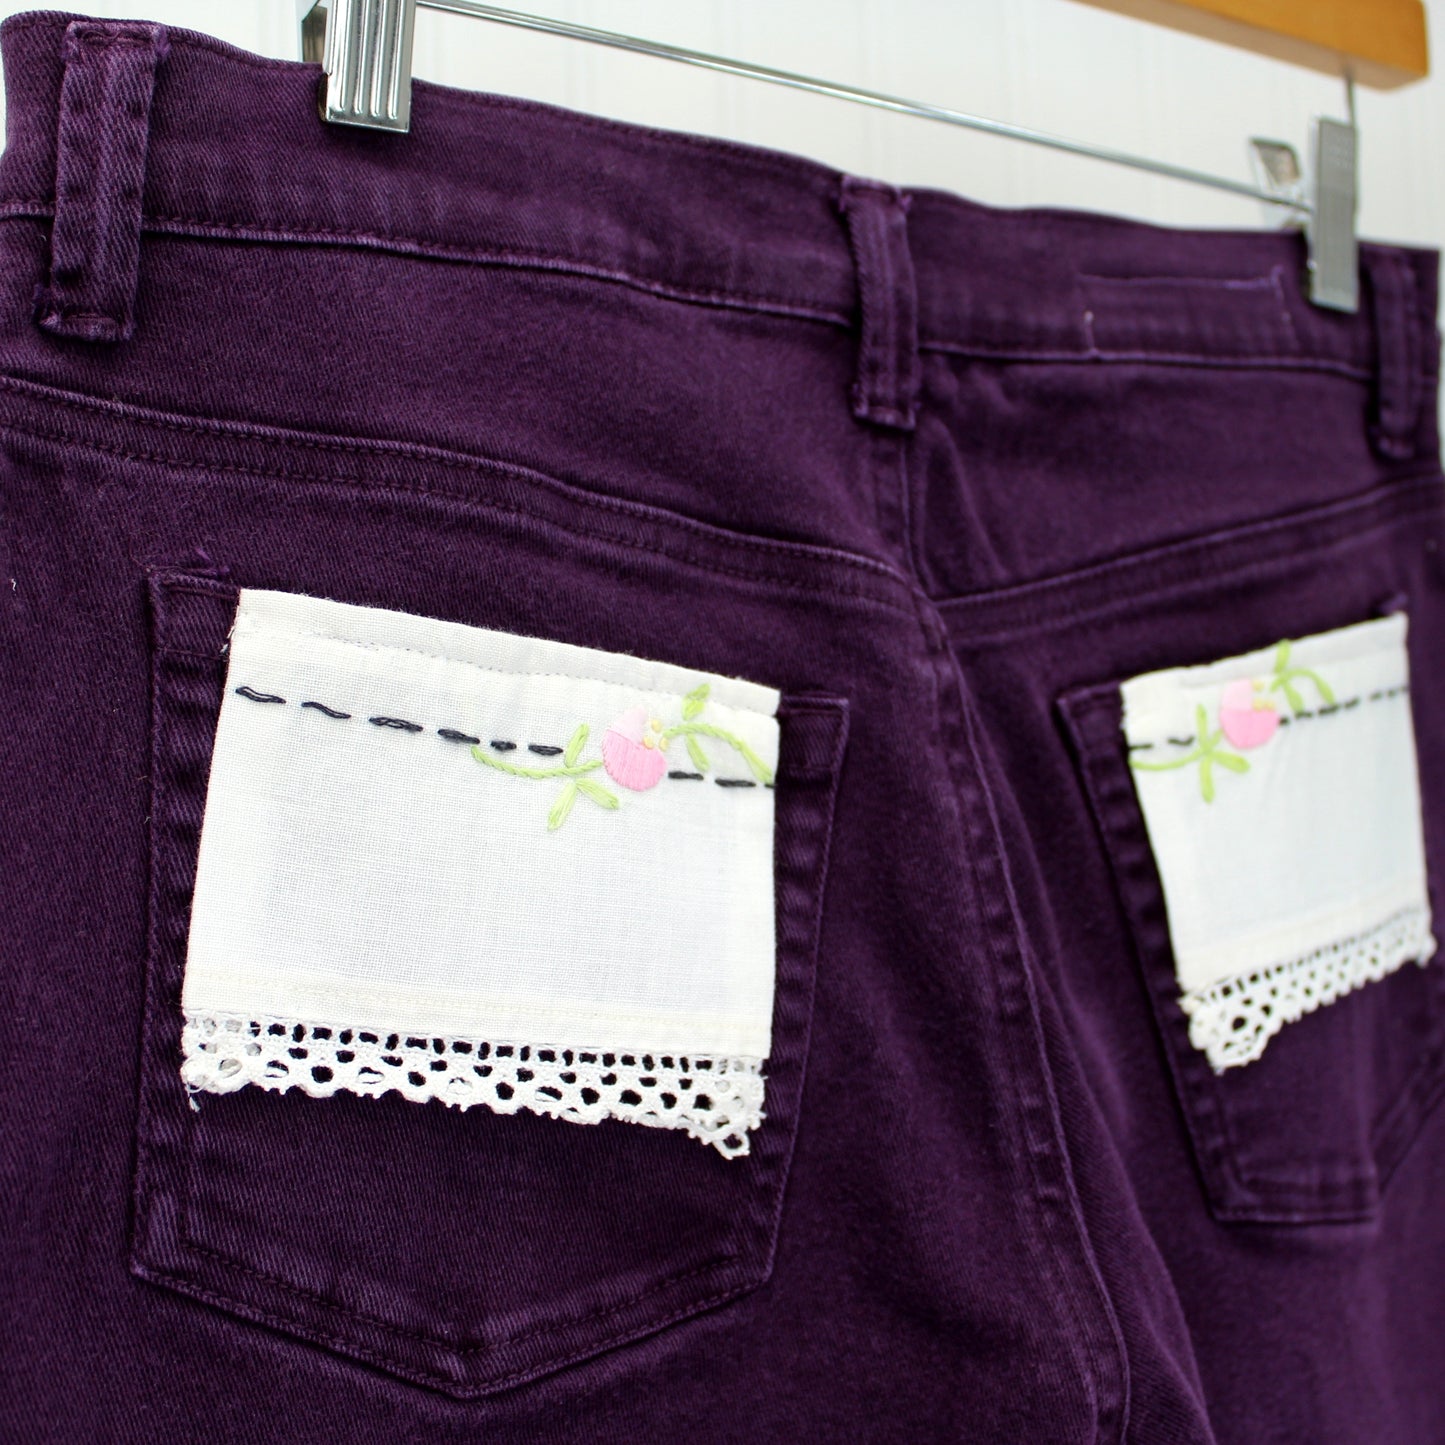 Gloria Vanderbilt Purple Jeans Patzi Design Embroidery Flower Basket Size 8 Short closeup back pockets